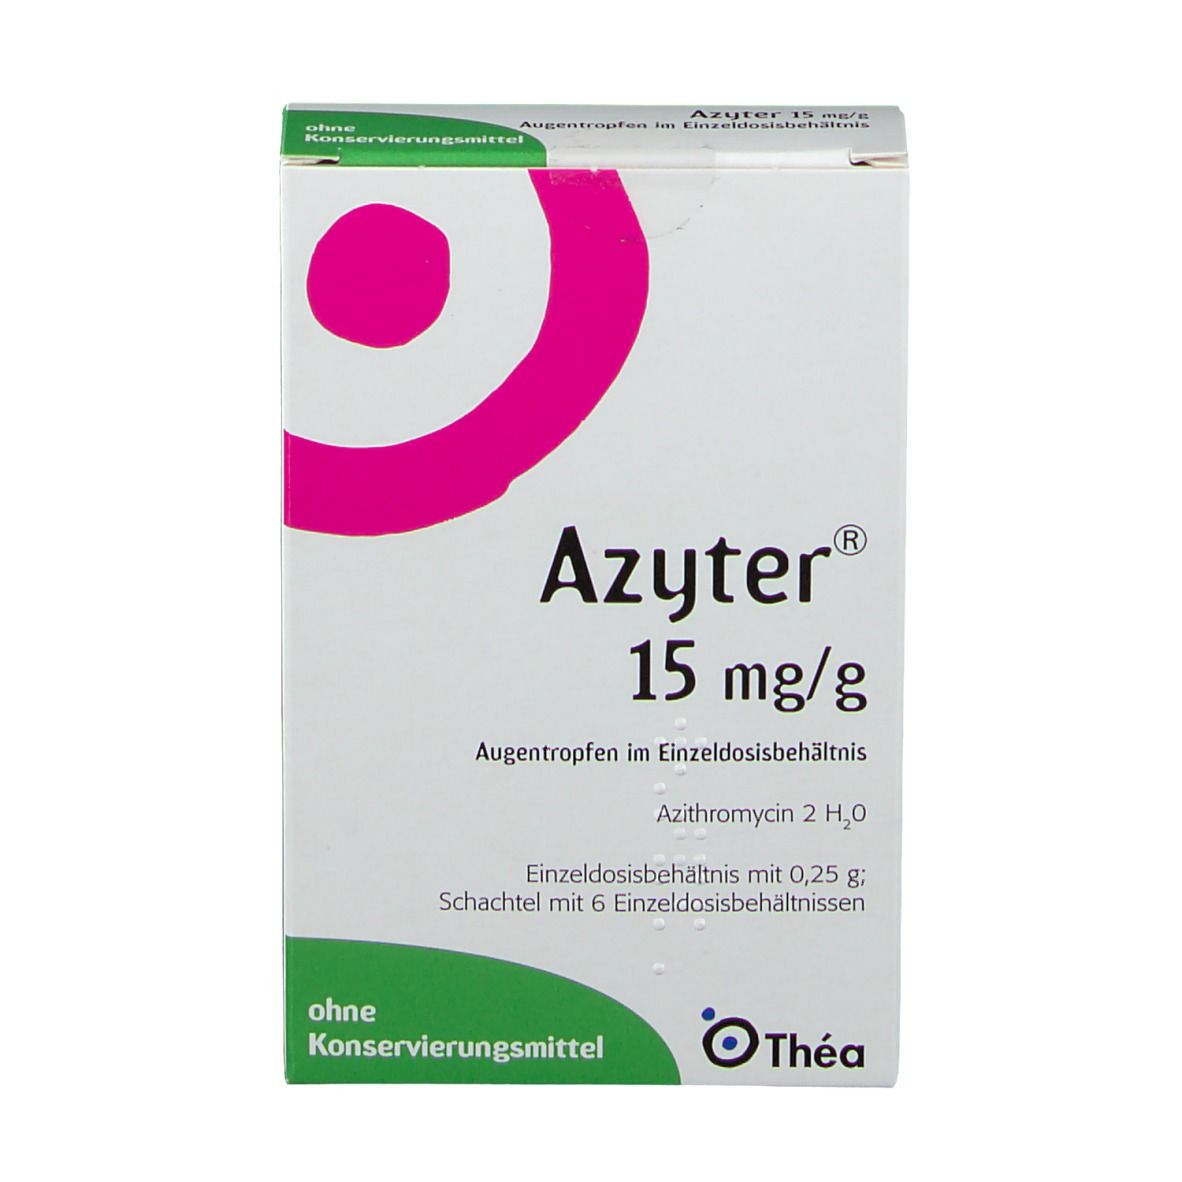 Azyter 15 mg/g